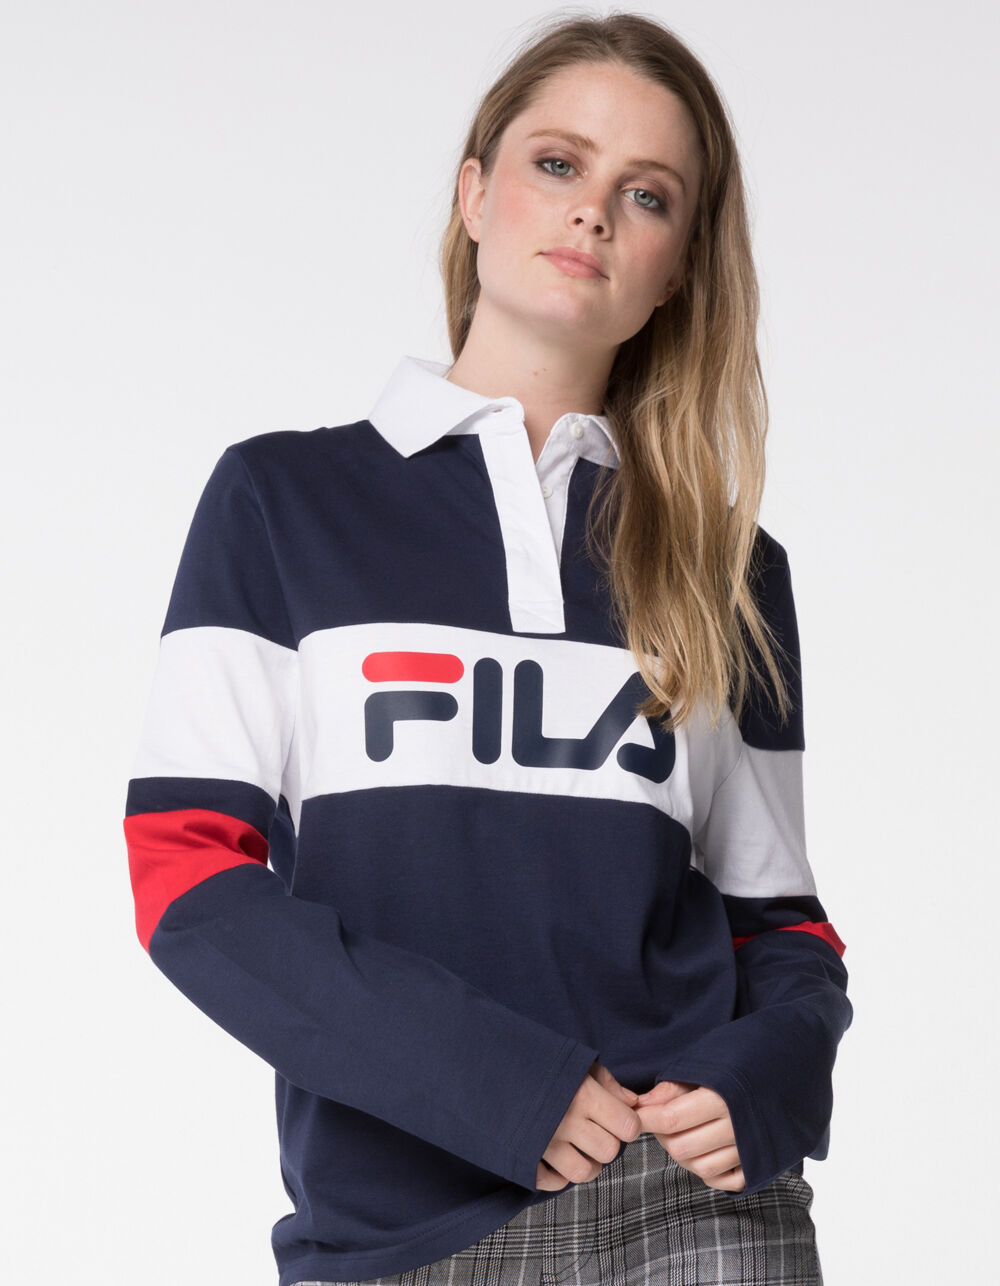 FILA Jacqualine Womens Polo Tee - NAVY COMBO | Tillys